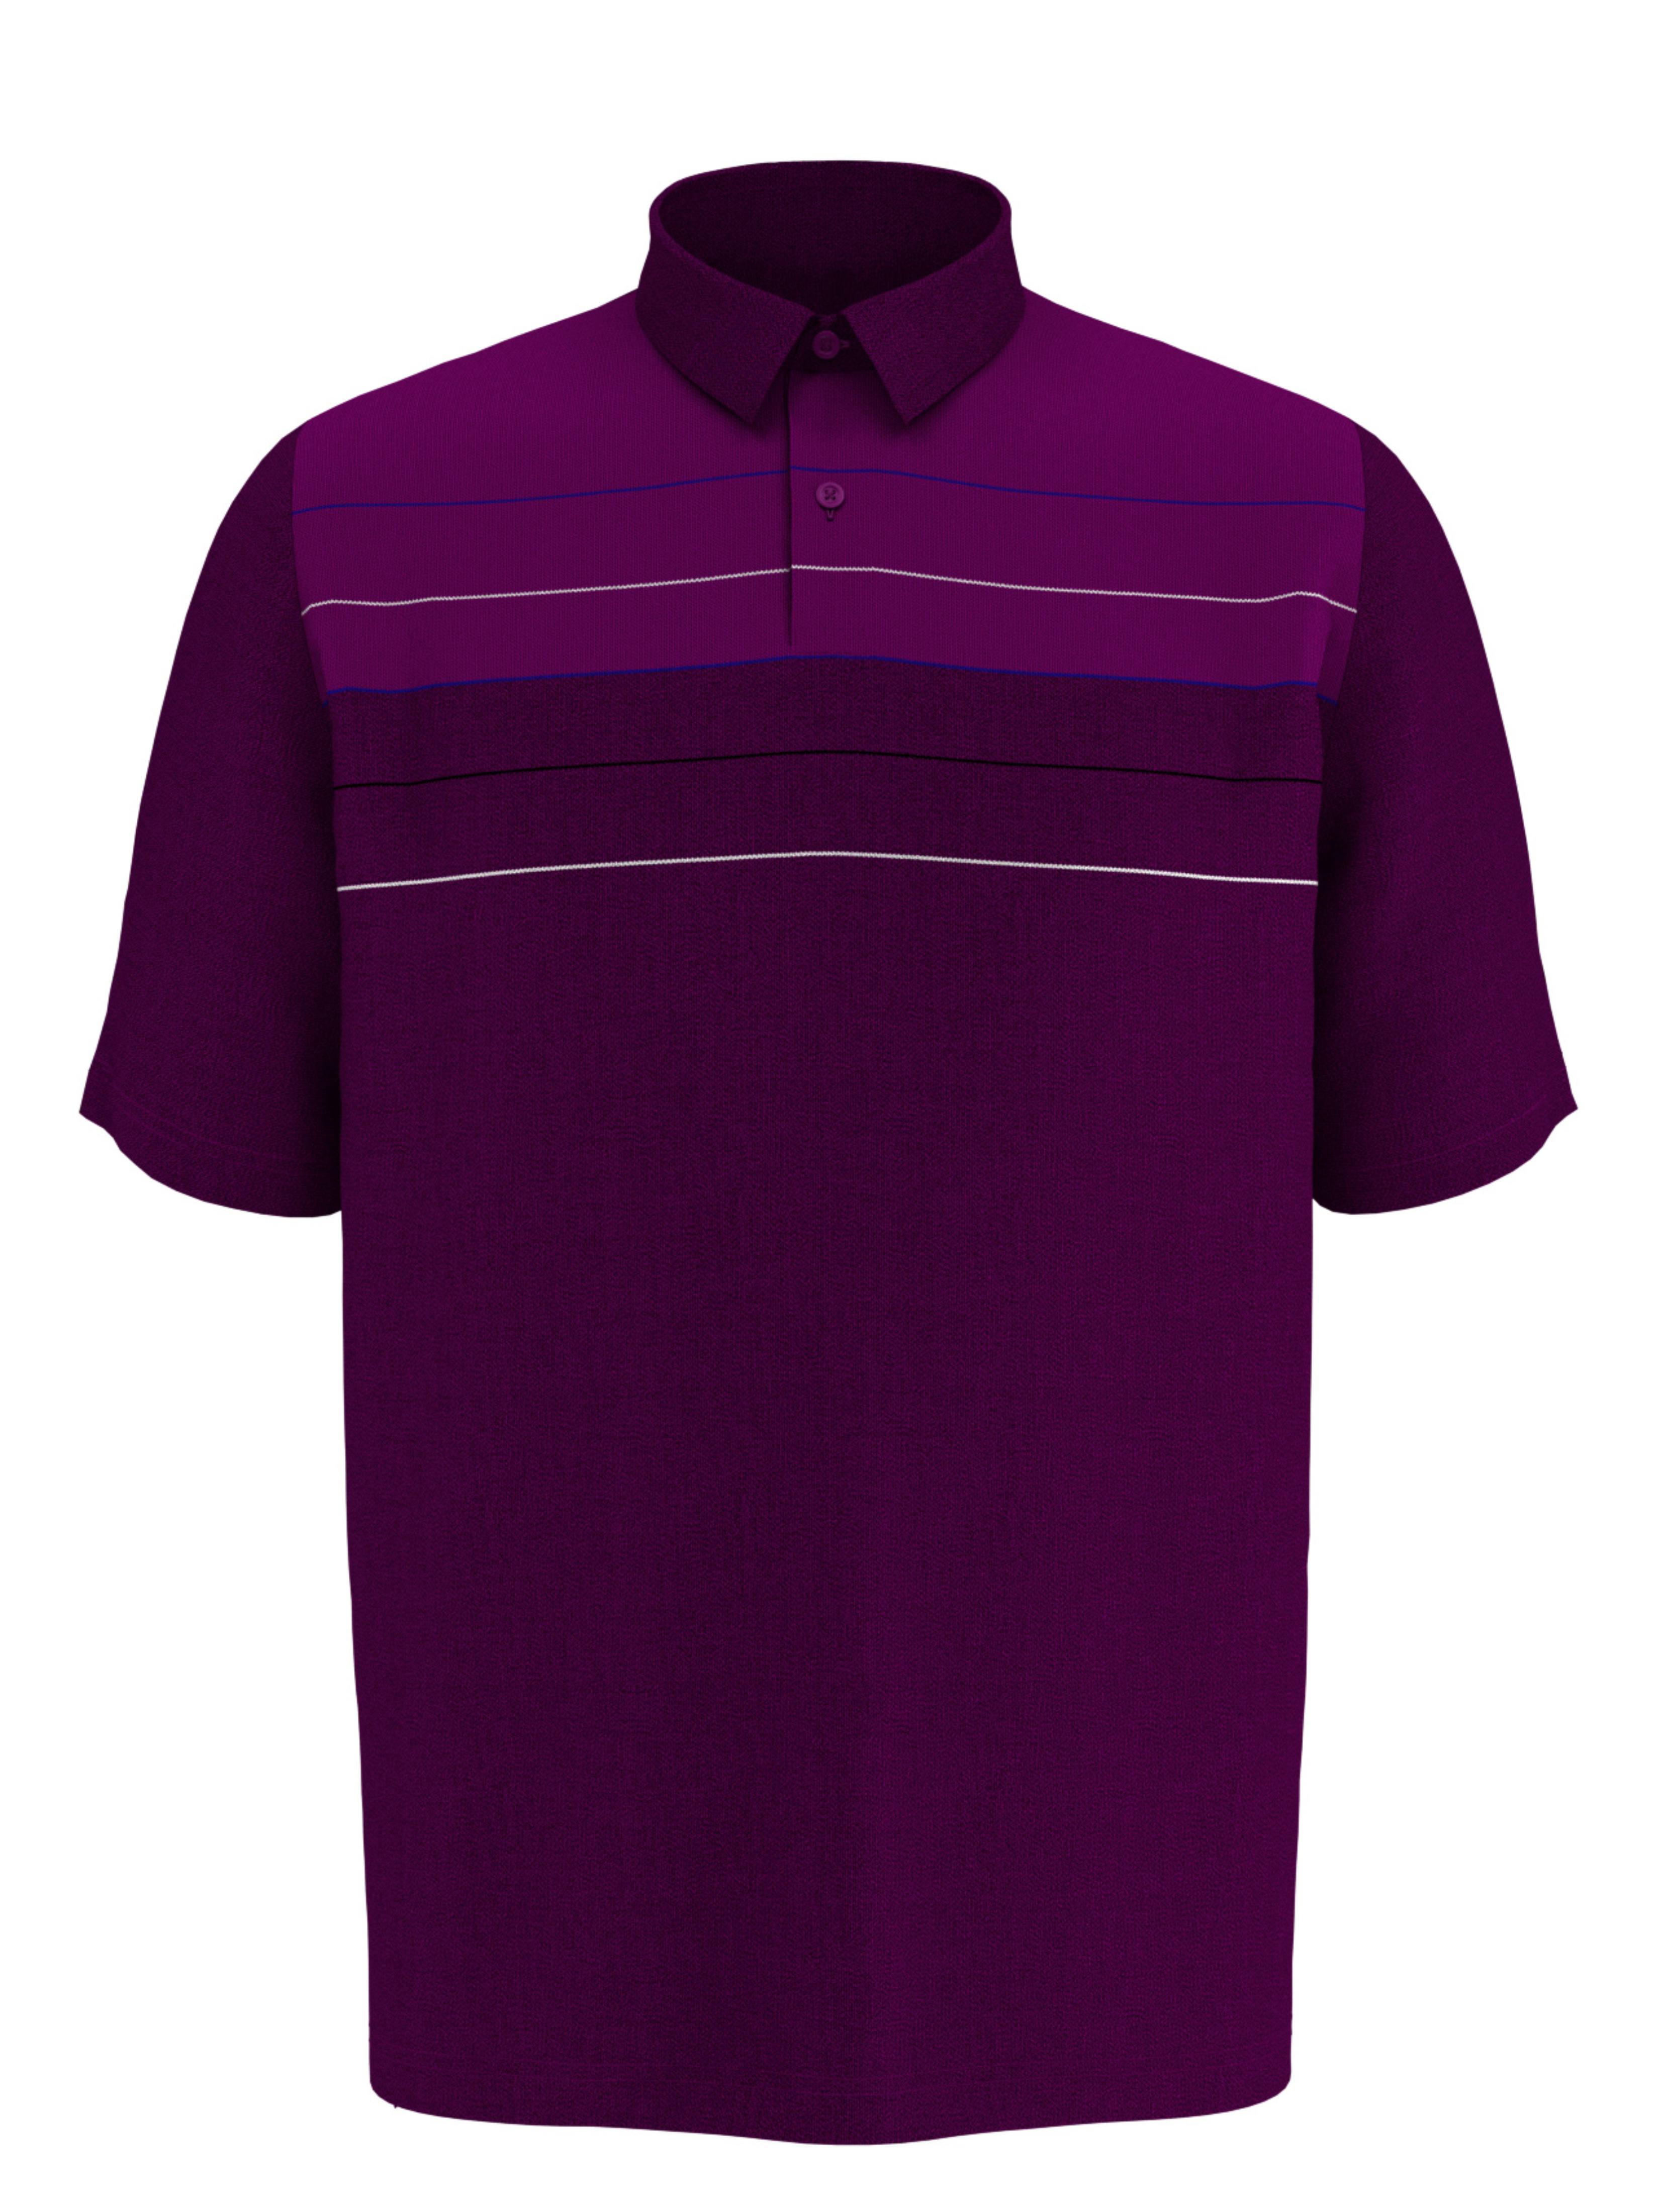 Callaway Apparel Mens Big & Tall Jaspe Color Block Golf Polo Shirt, Size XLT, Dark Purple, Polyester/Recycled Polyester/Elastane | Golf Apparel Shop